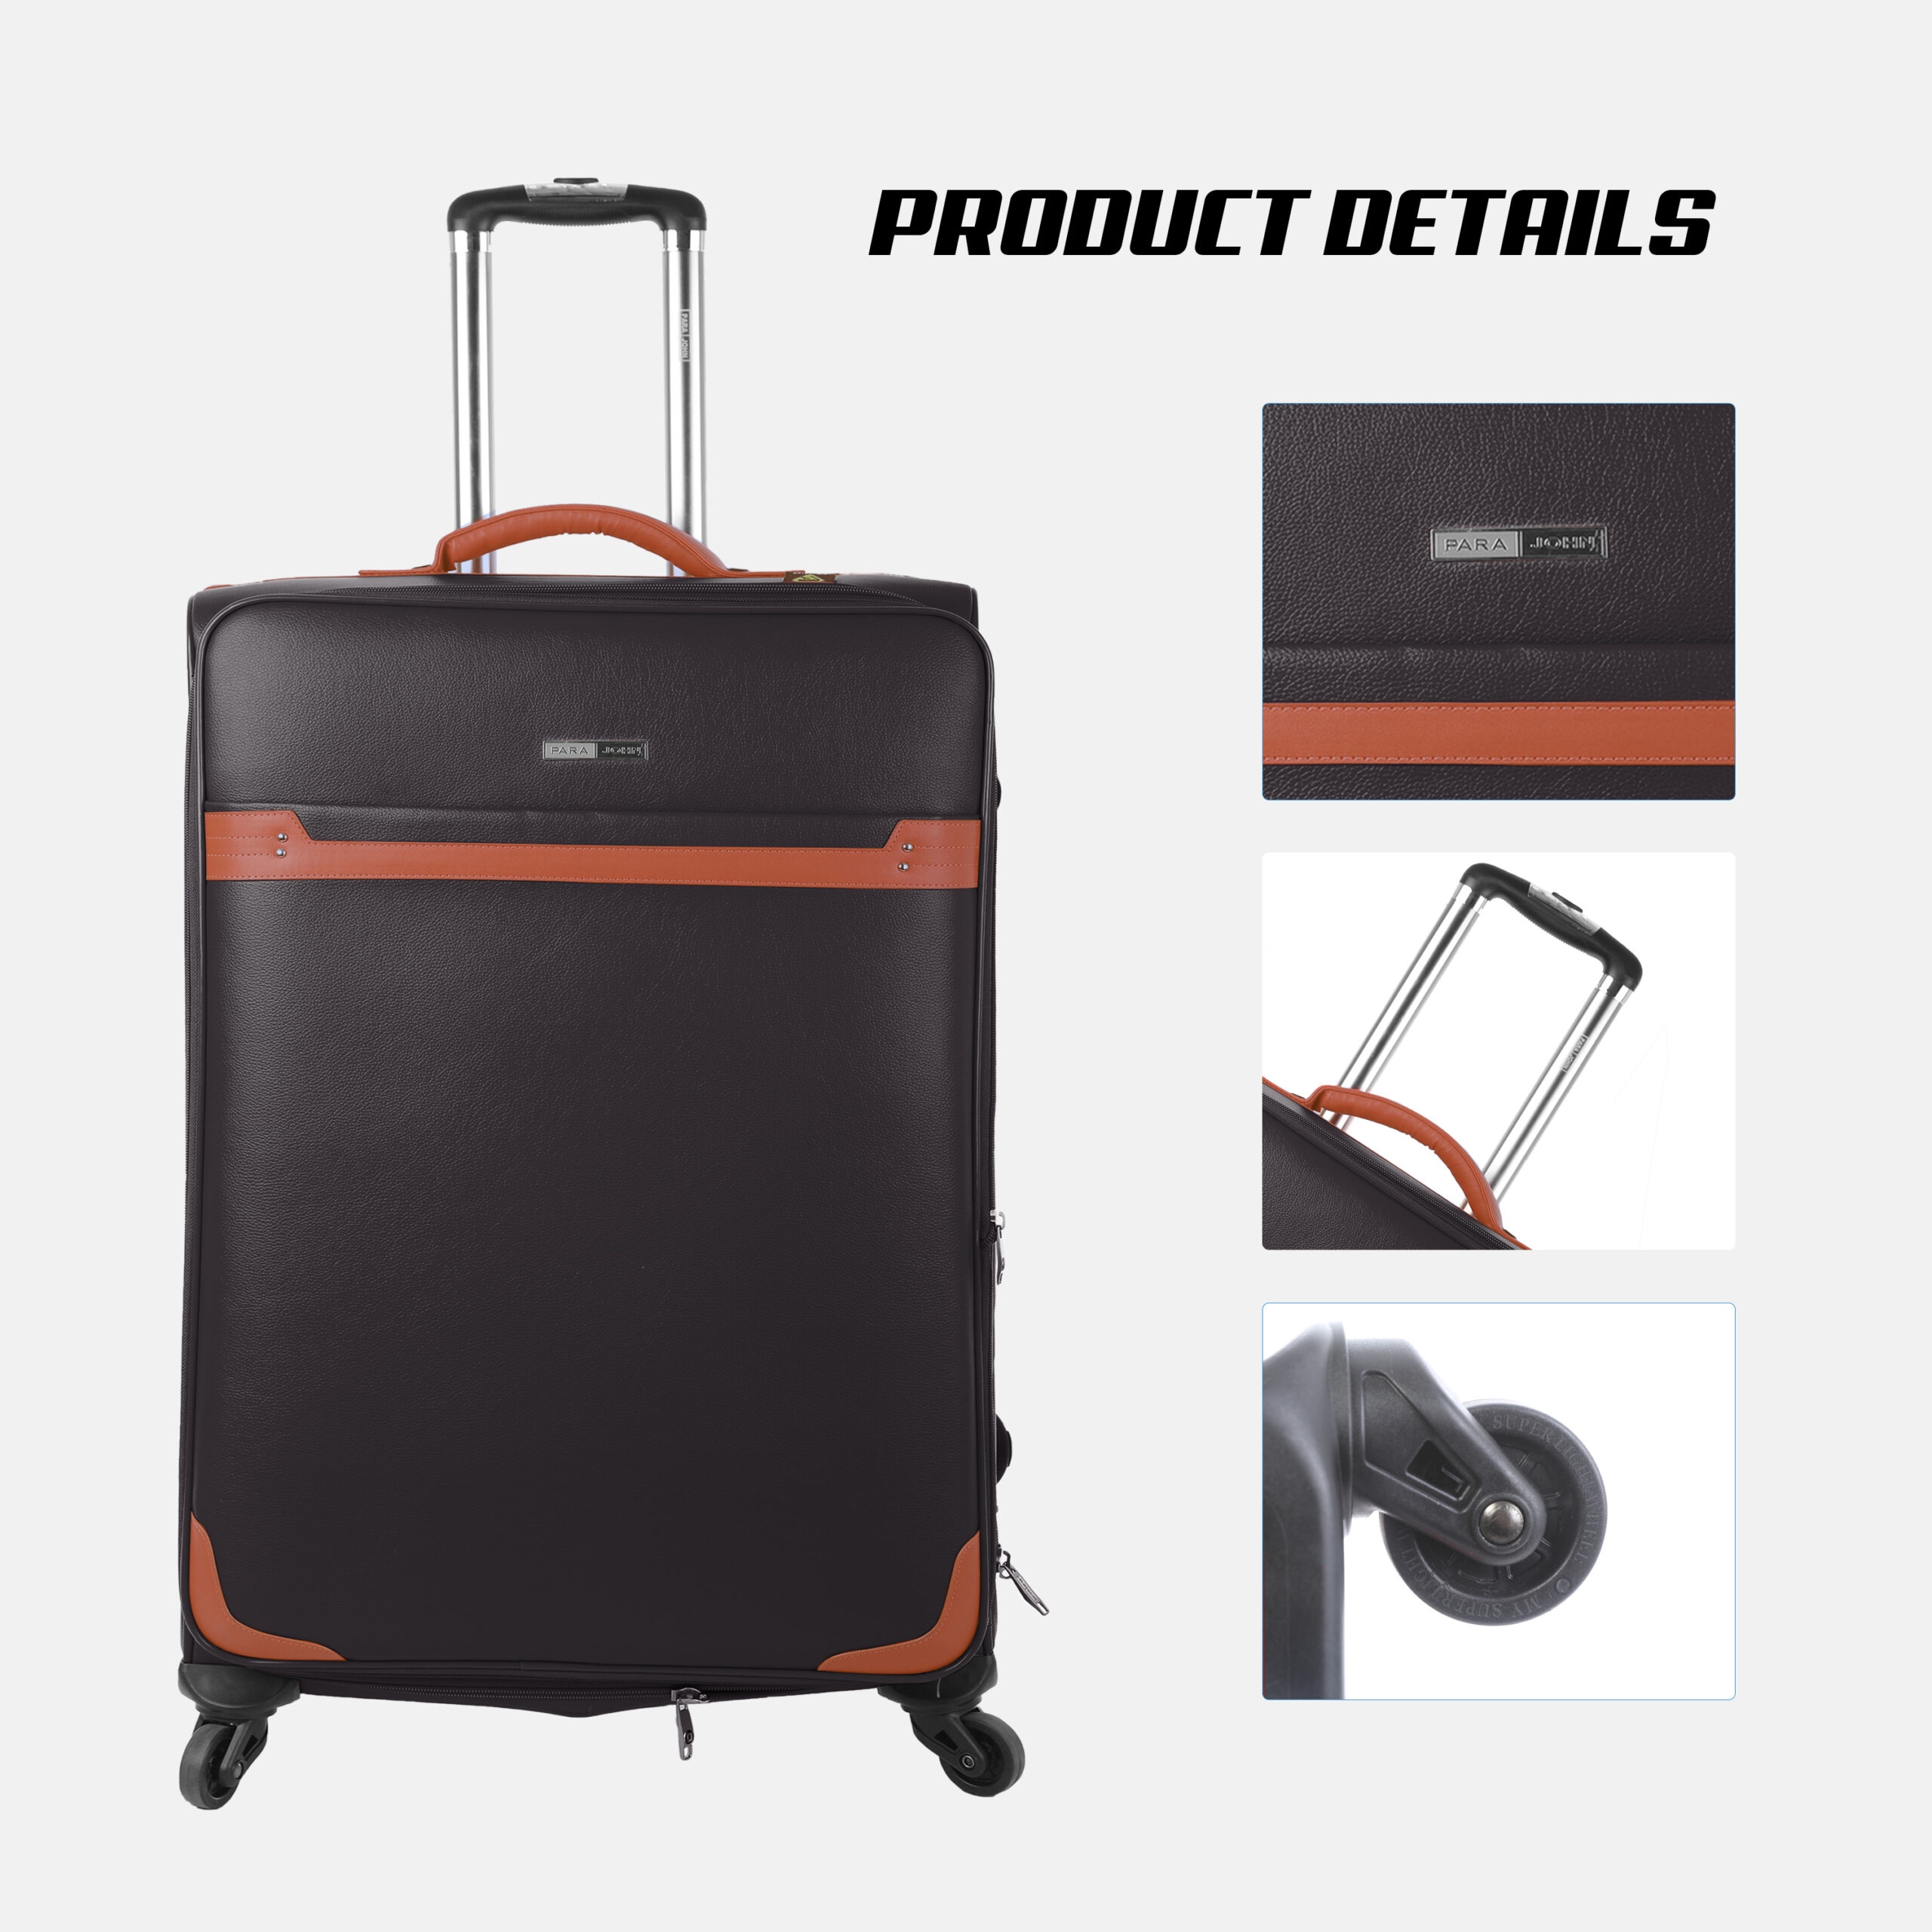 طقم حقائب سفر دوارة 4 حقائب (16 ، 20 ، 24 ، 28) بوصة ABS بني PARA JOHN - 4 Pcs Travel Luggage Suitcase Trolley Set - PVC Leather Cabin Trolley Bag – Cabin size suitcase for Business Travellers - (16 ، 20 ، 24 ، 28) inch